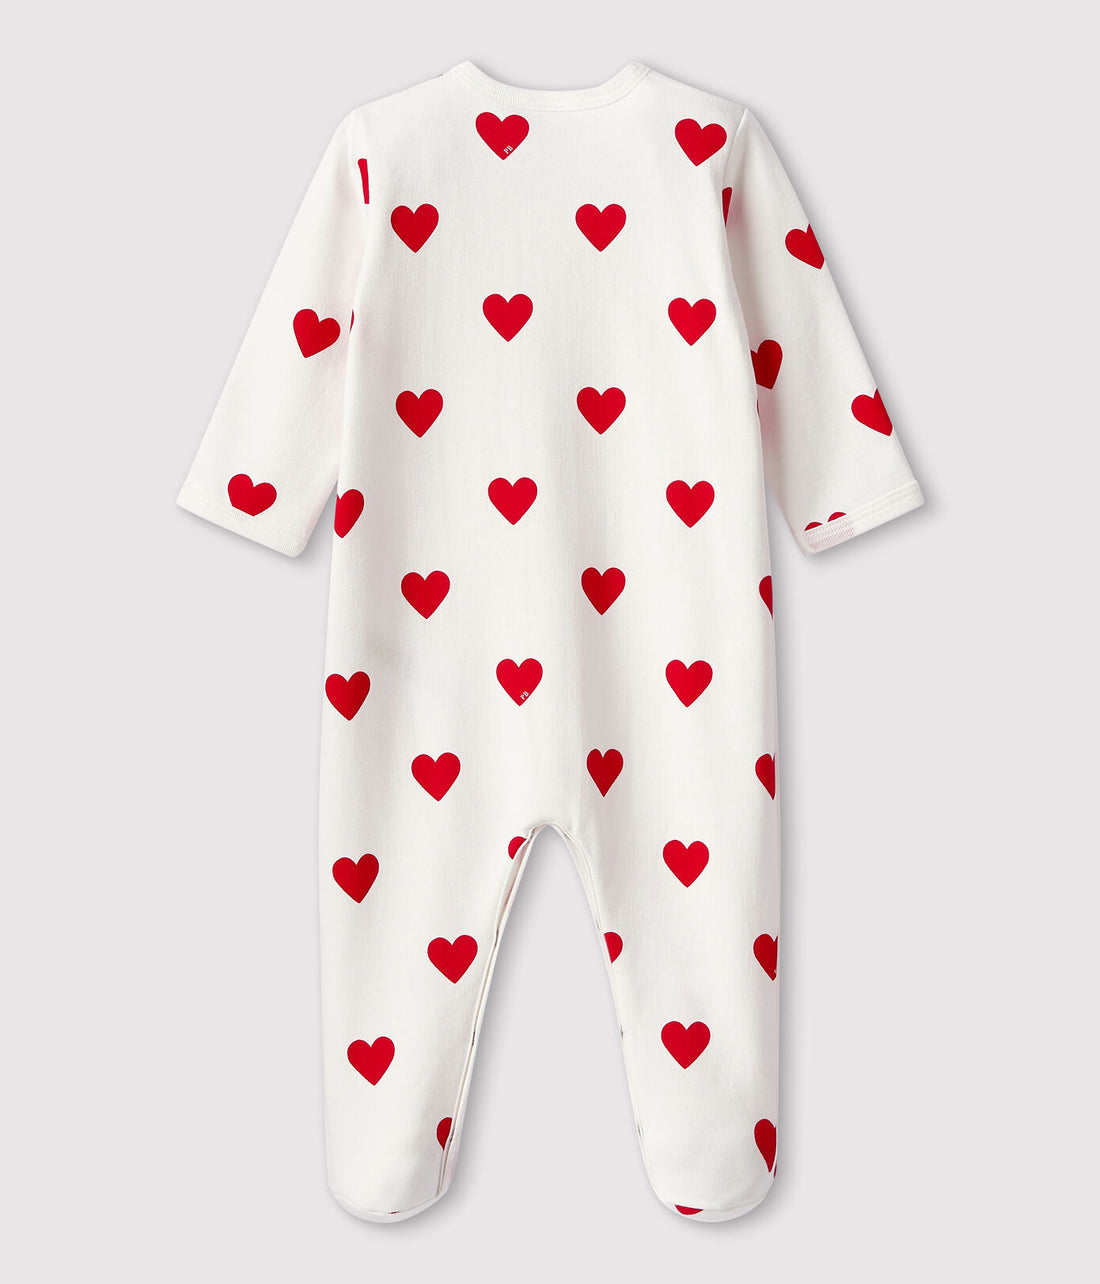 Red Heart Footed Fleece Sleepsuit - Parkette.